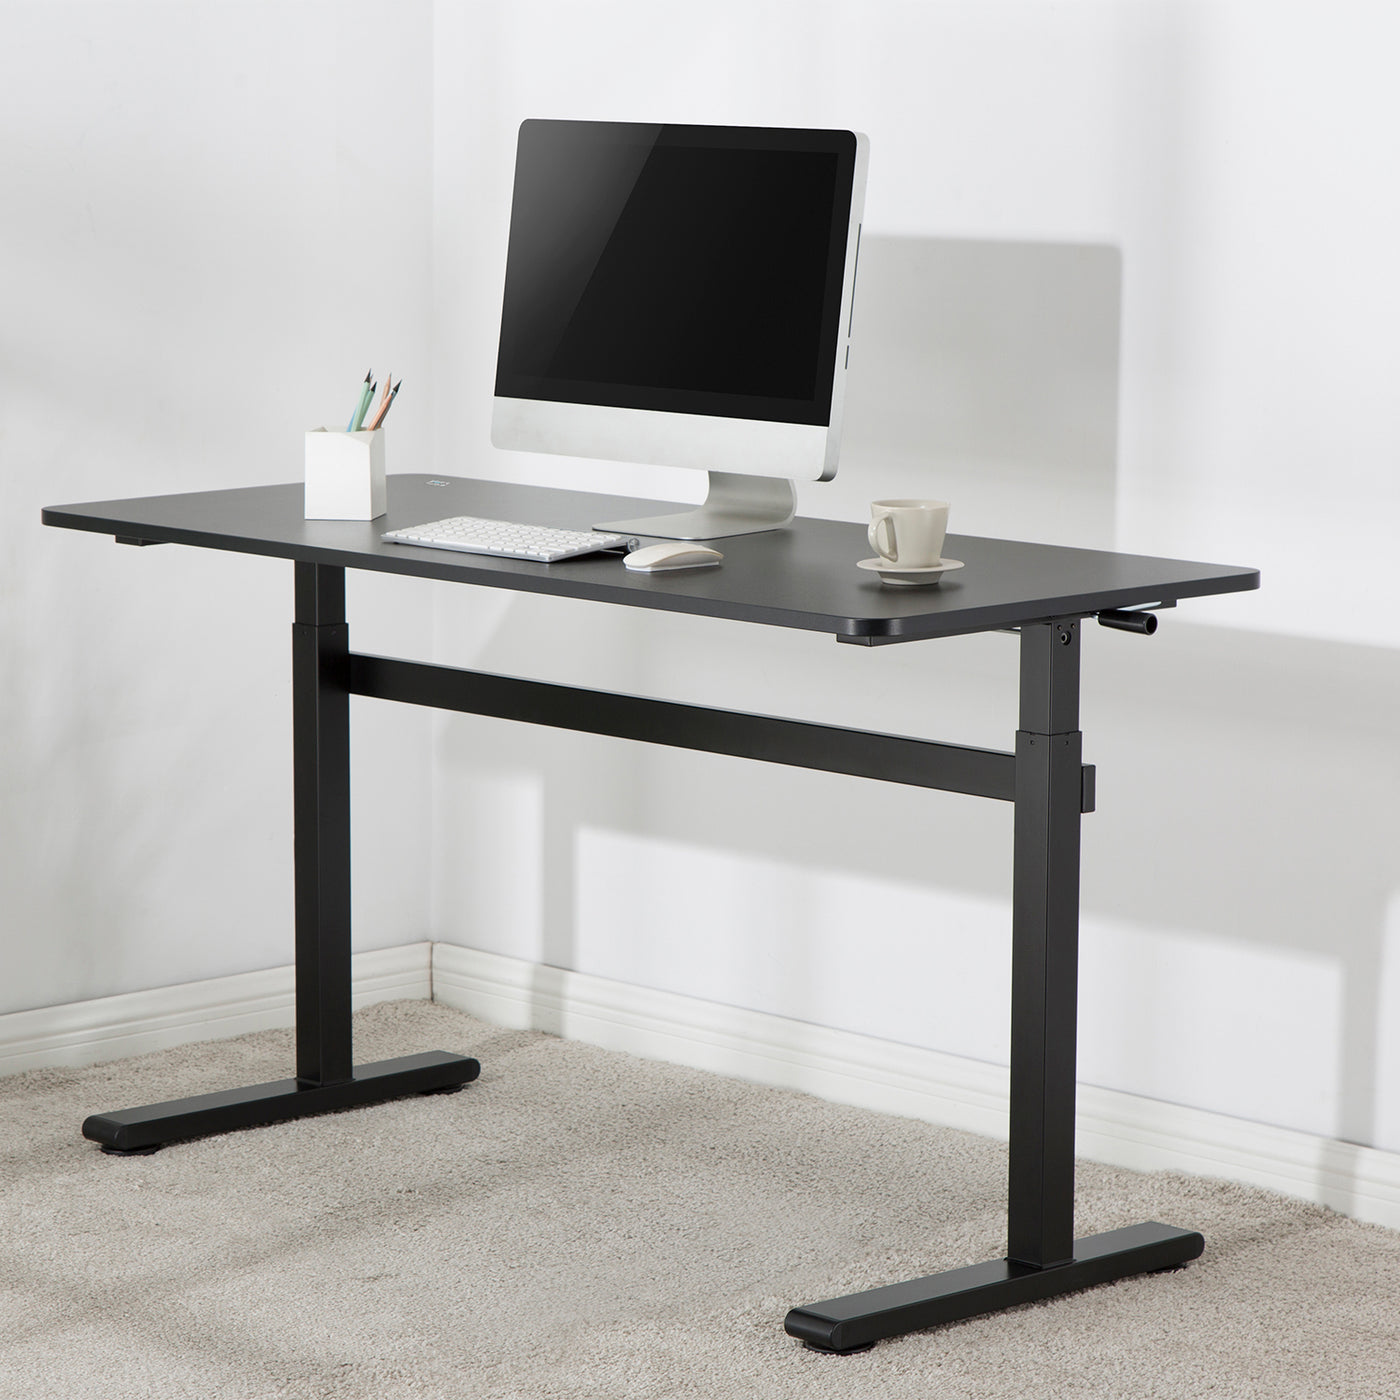 Ergo Office ER-401 Sit-stand desk 140x60cm Manual Height Adjustable Office Desk max 117cm Ergonomic Table Loadable up to 40kg Black